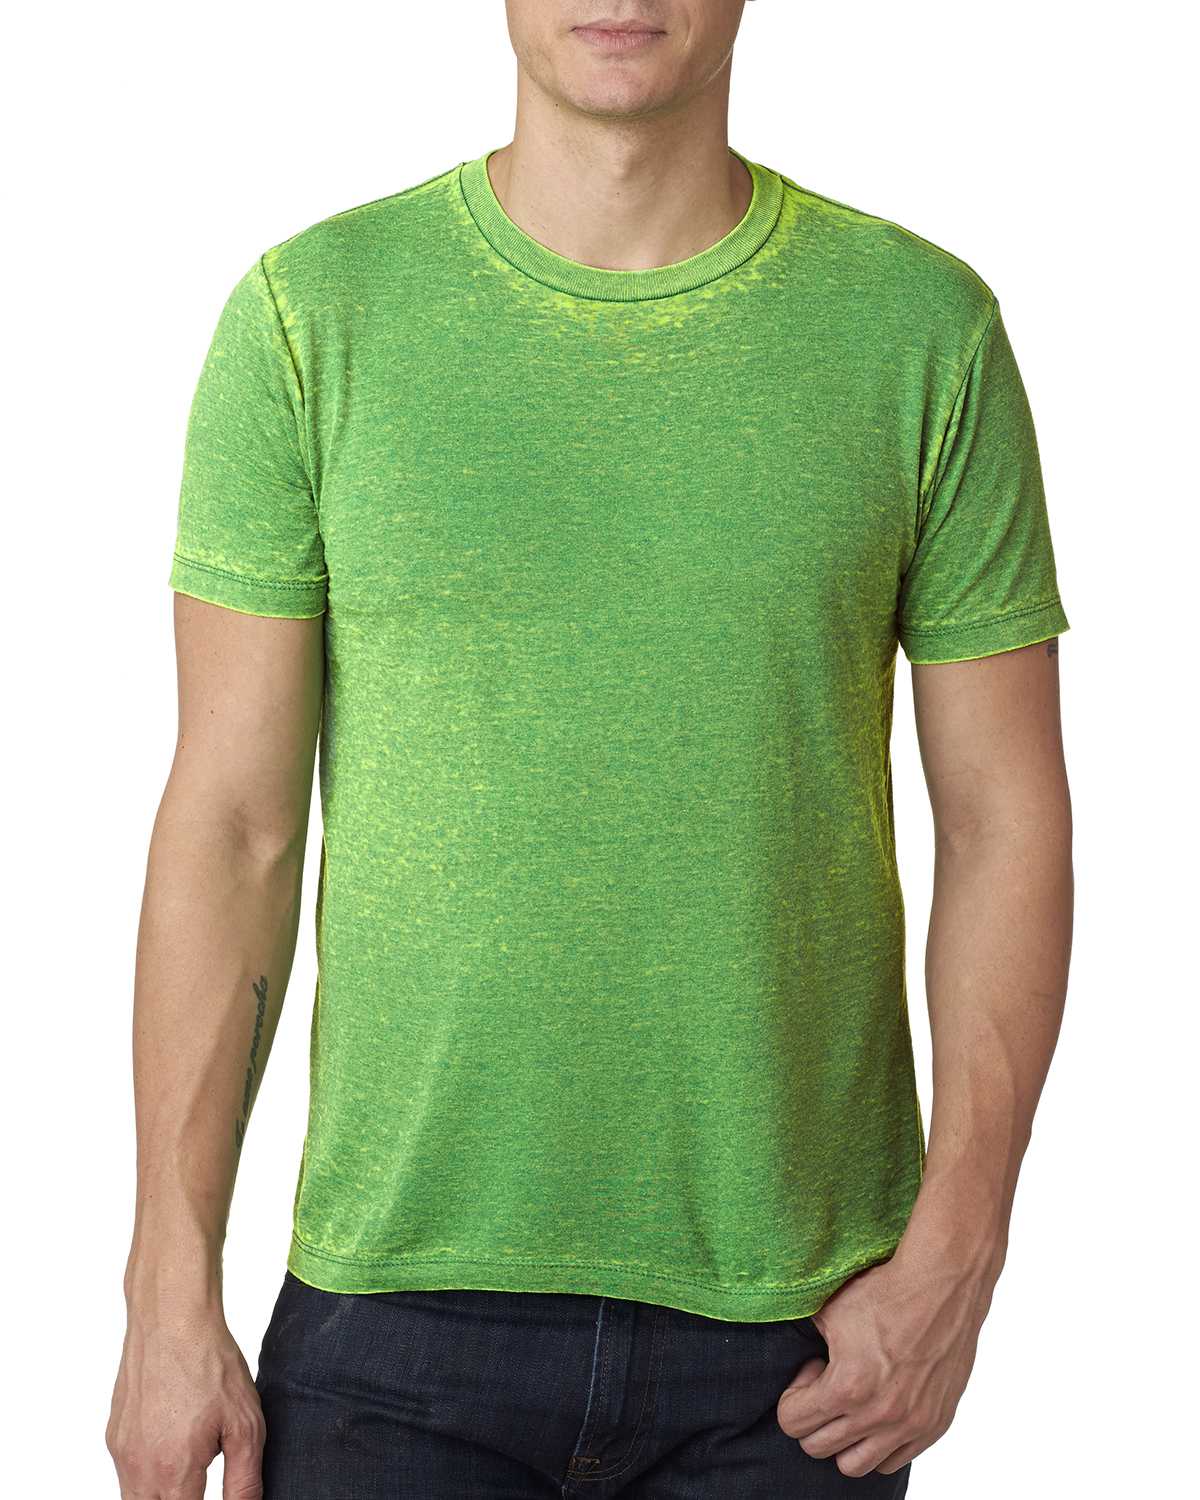 Tie-Dye 1350 Adult Acid Wash T-Shirt | ApparelChoice.com